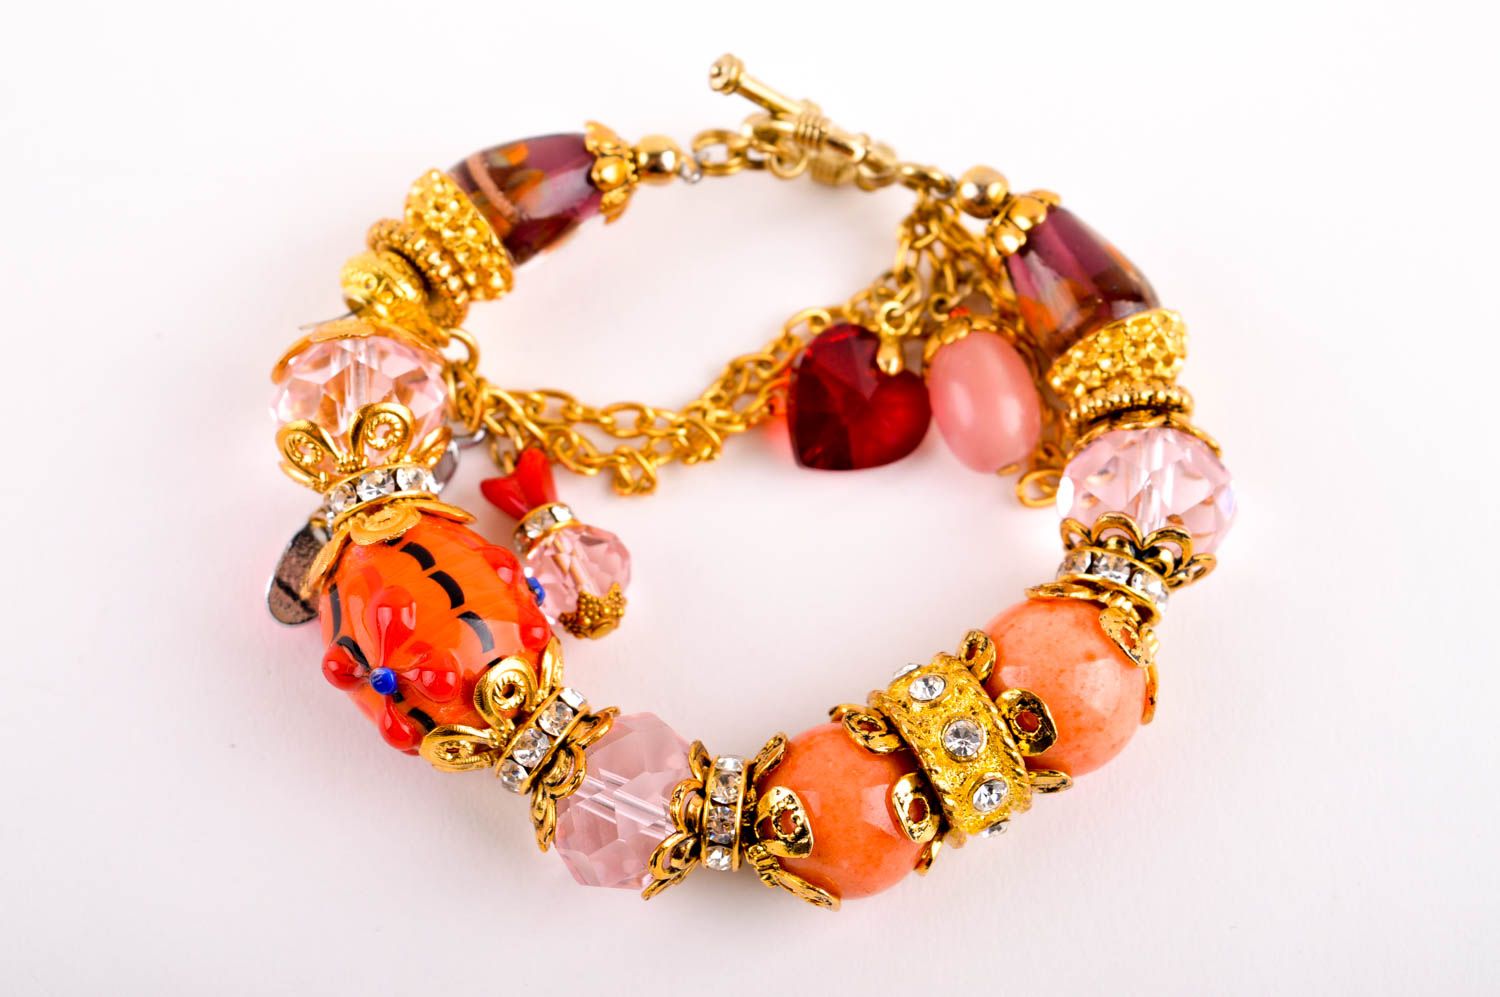 Handmade bracelet with natural stones designer stone jewelry fashion jewelry photo 2